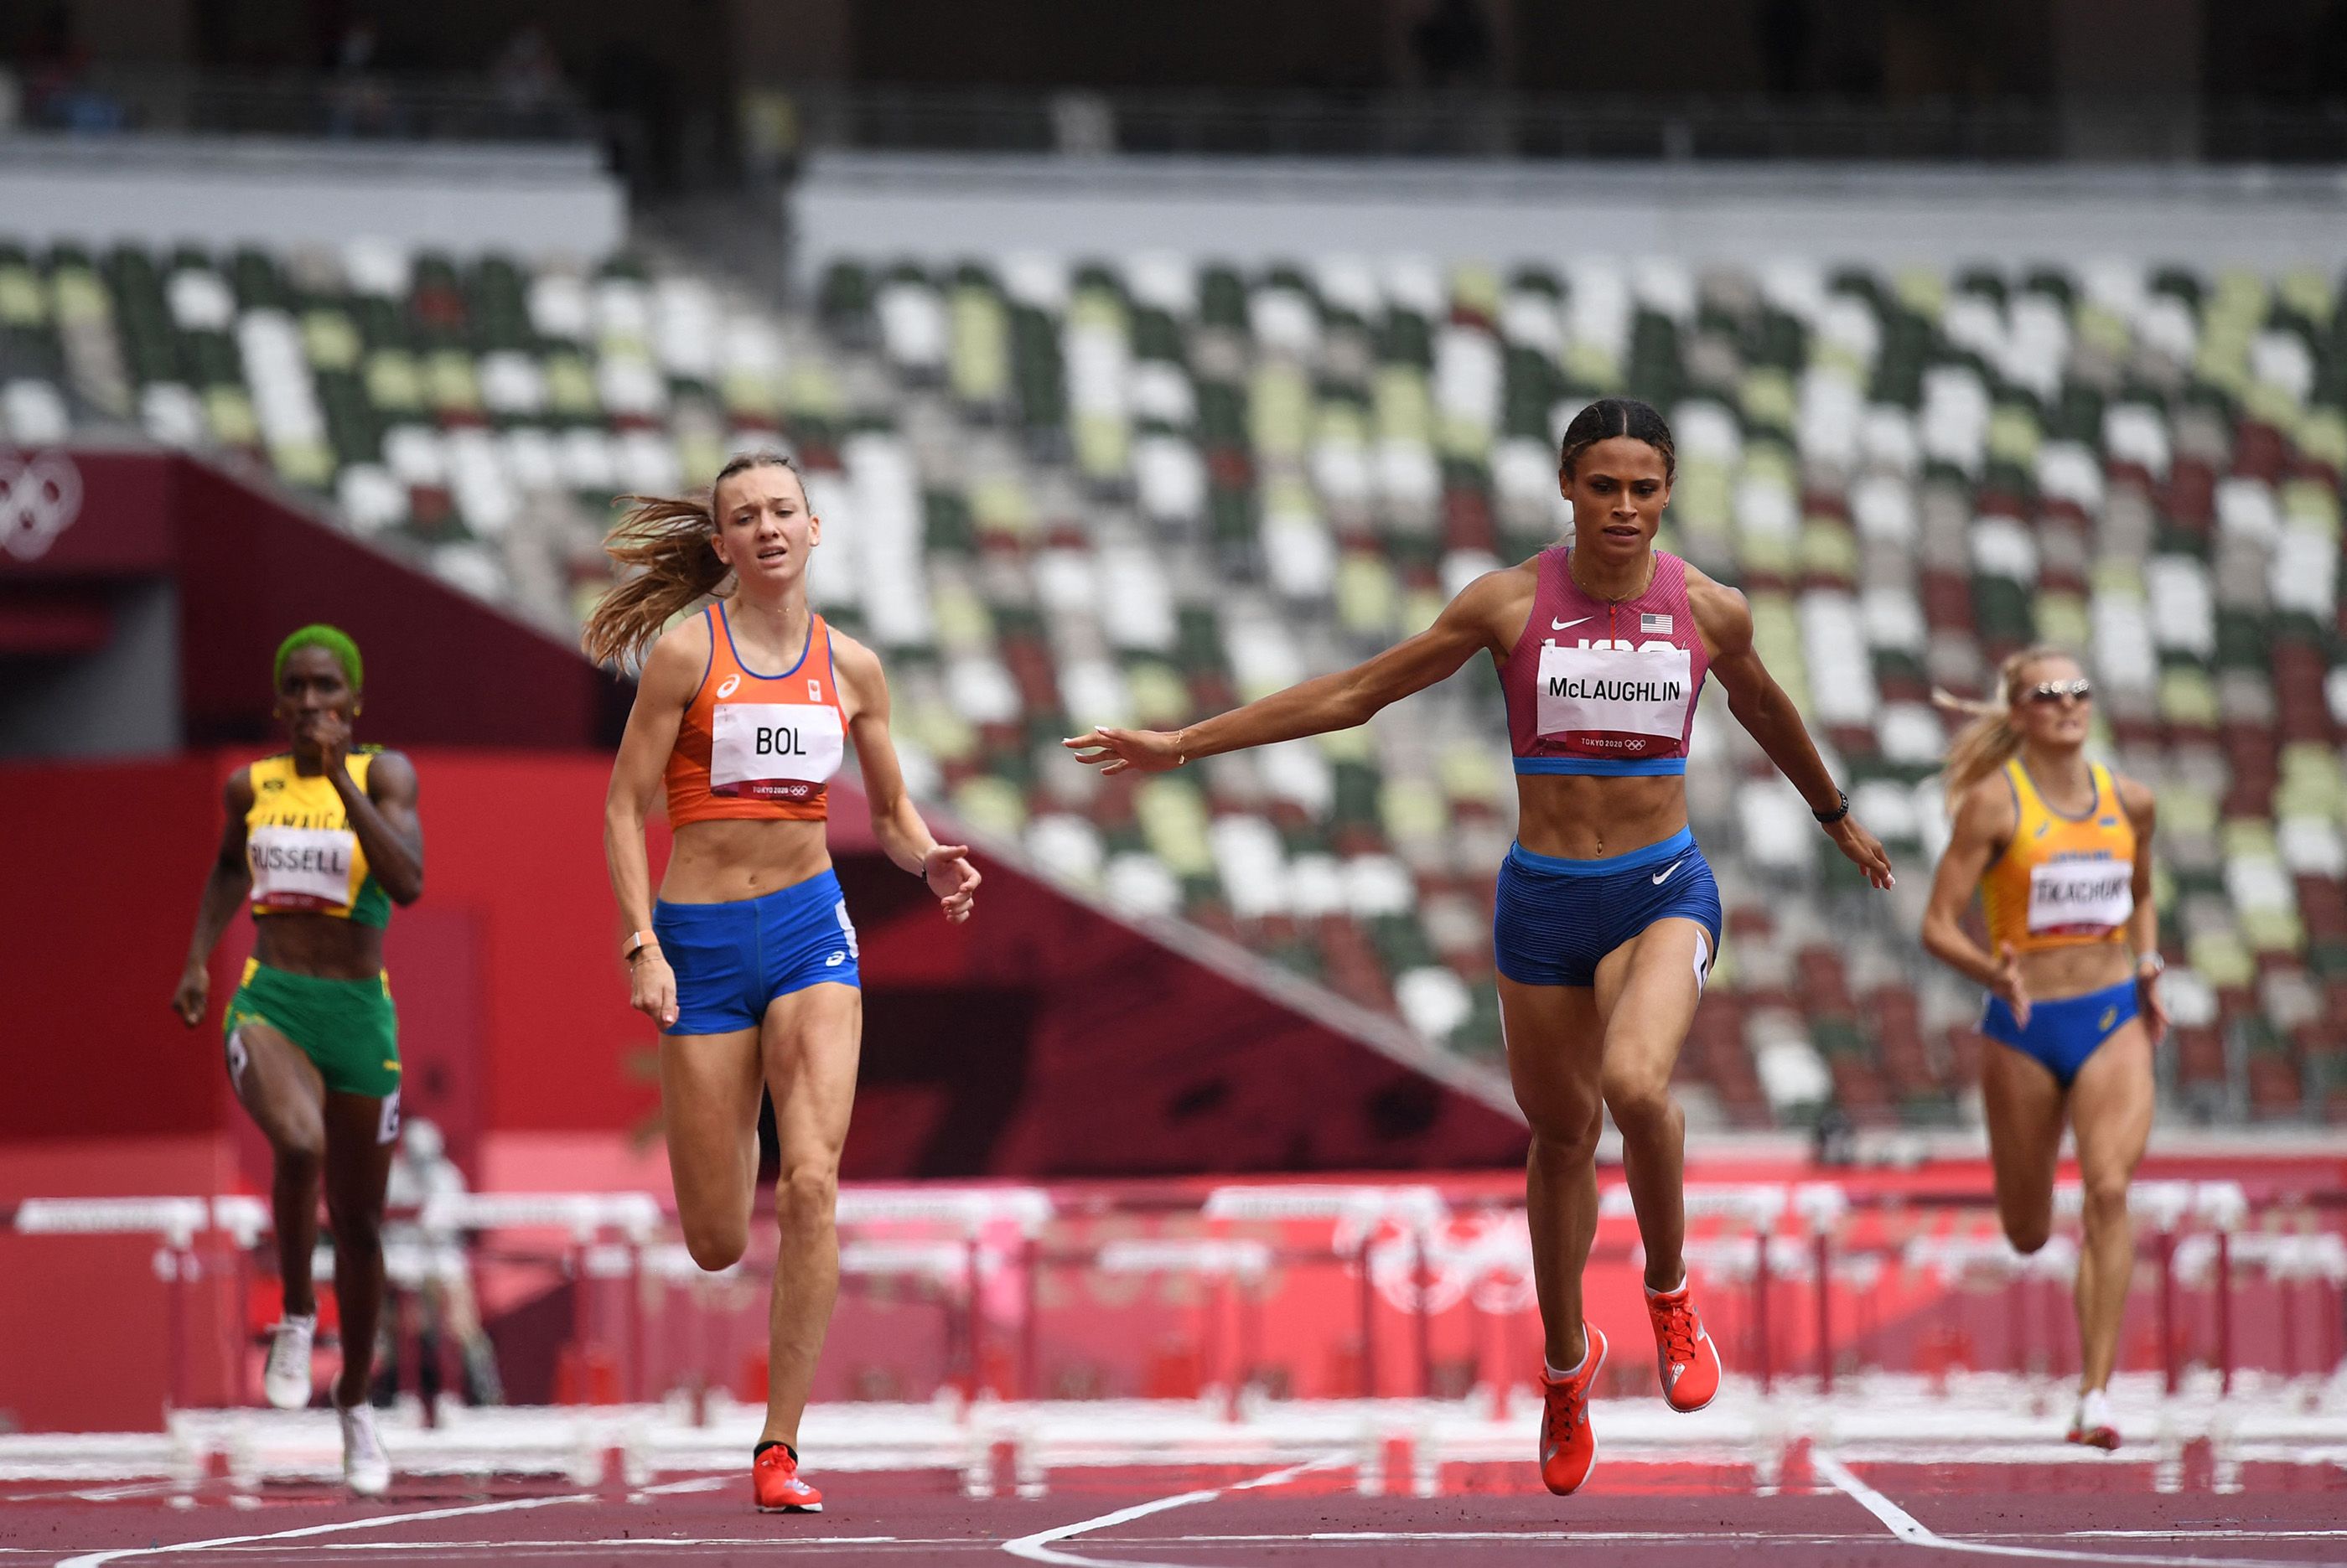 Femke Bol and Sydney McLaughlin-Levrone in the Olympic 400m hurdles final